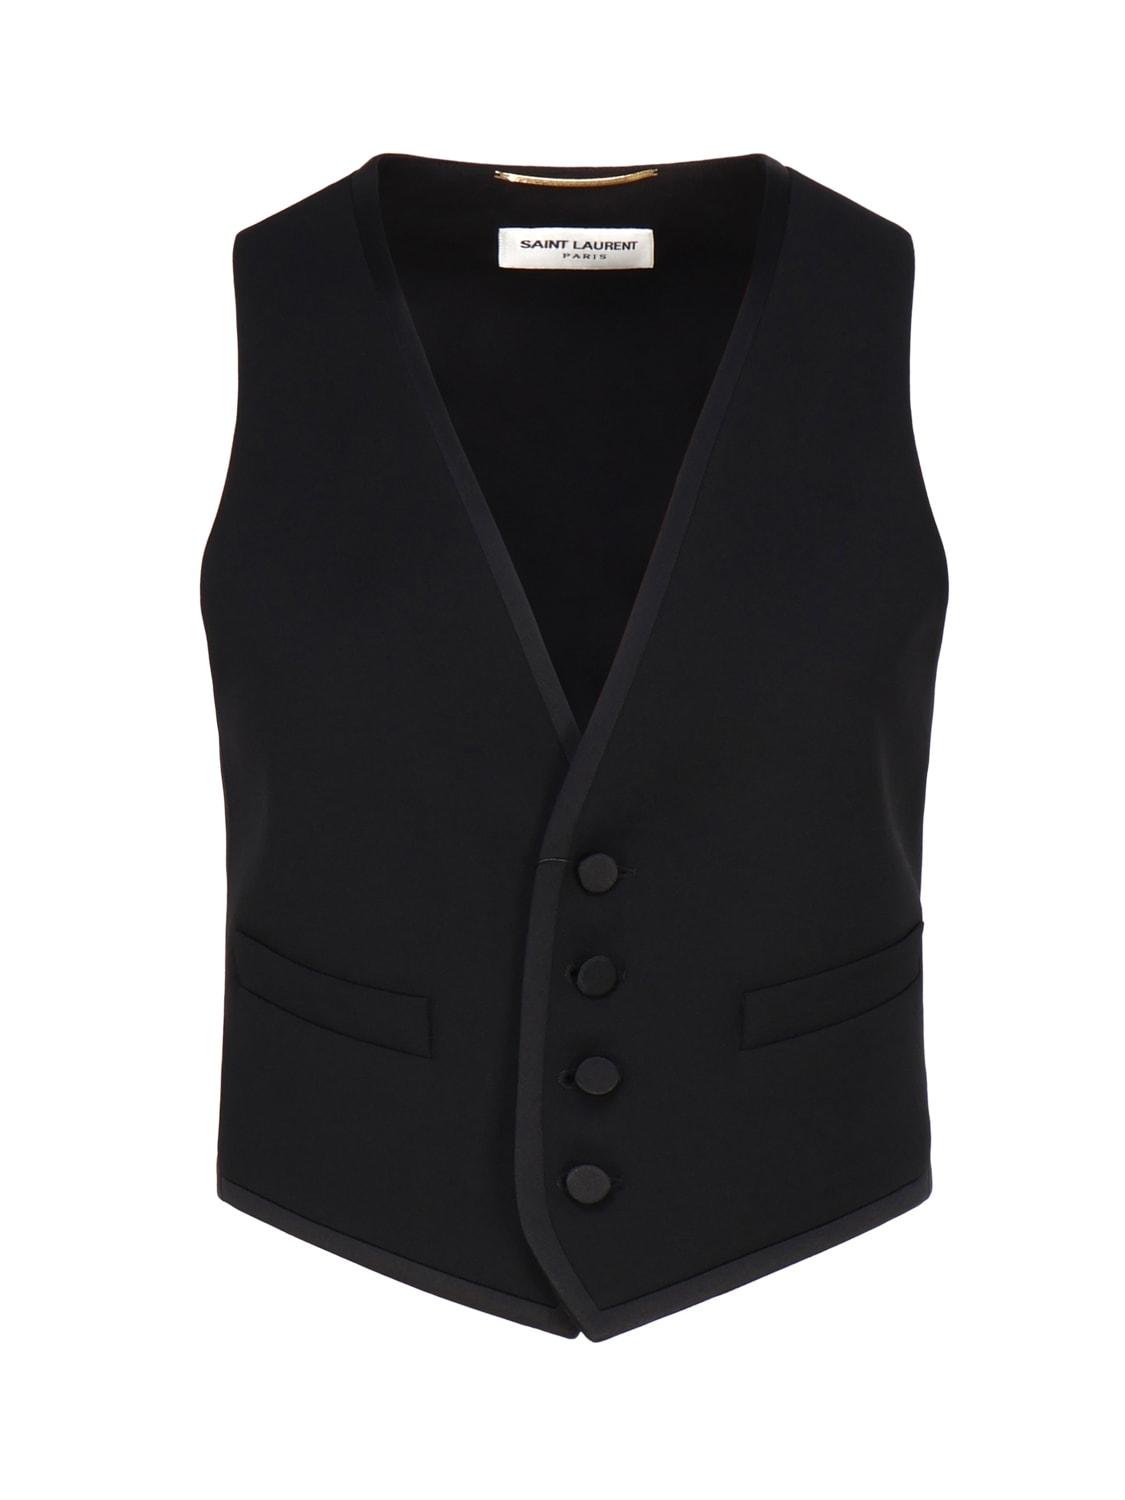 Saint Laurent Short Wool Tuxedo Vest in Black